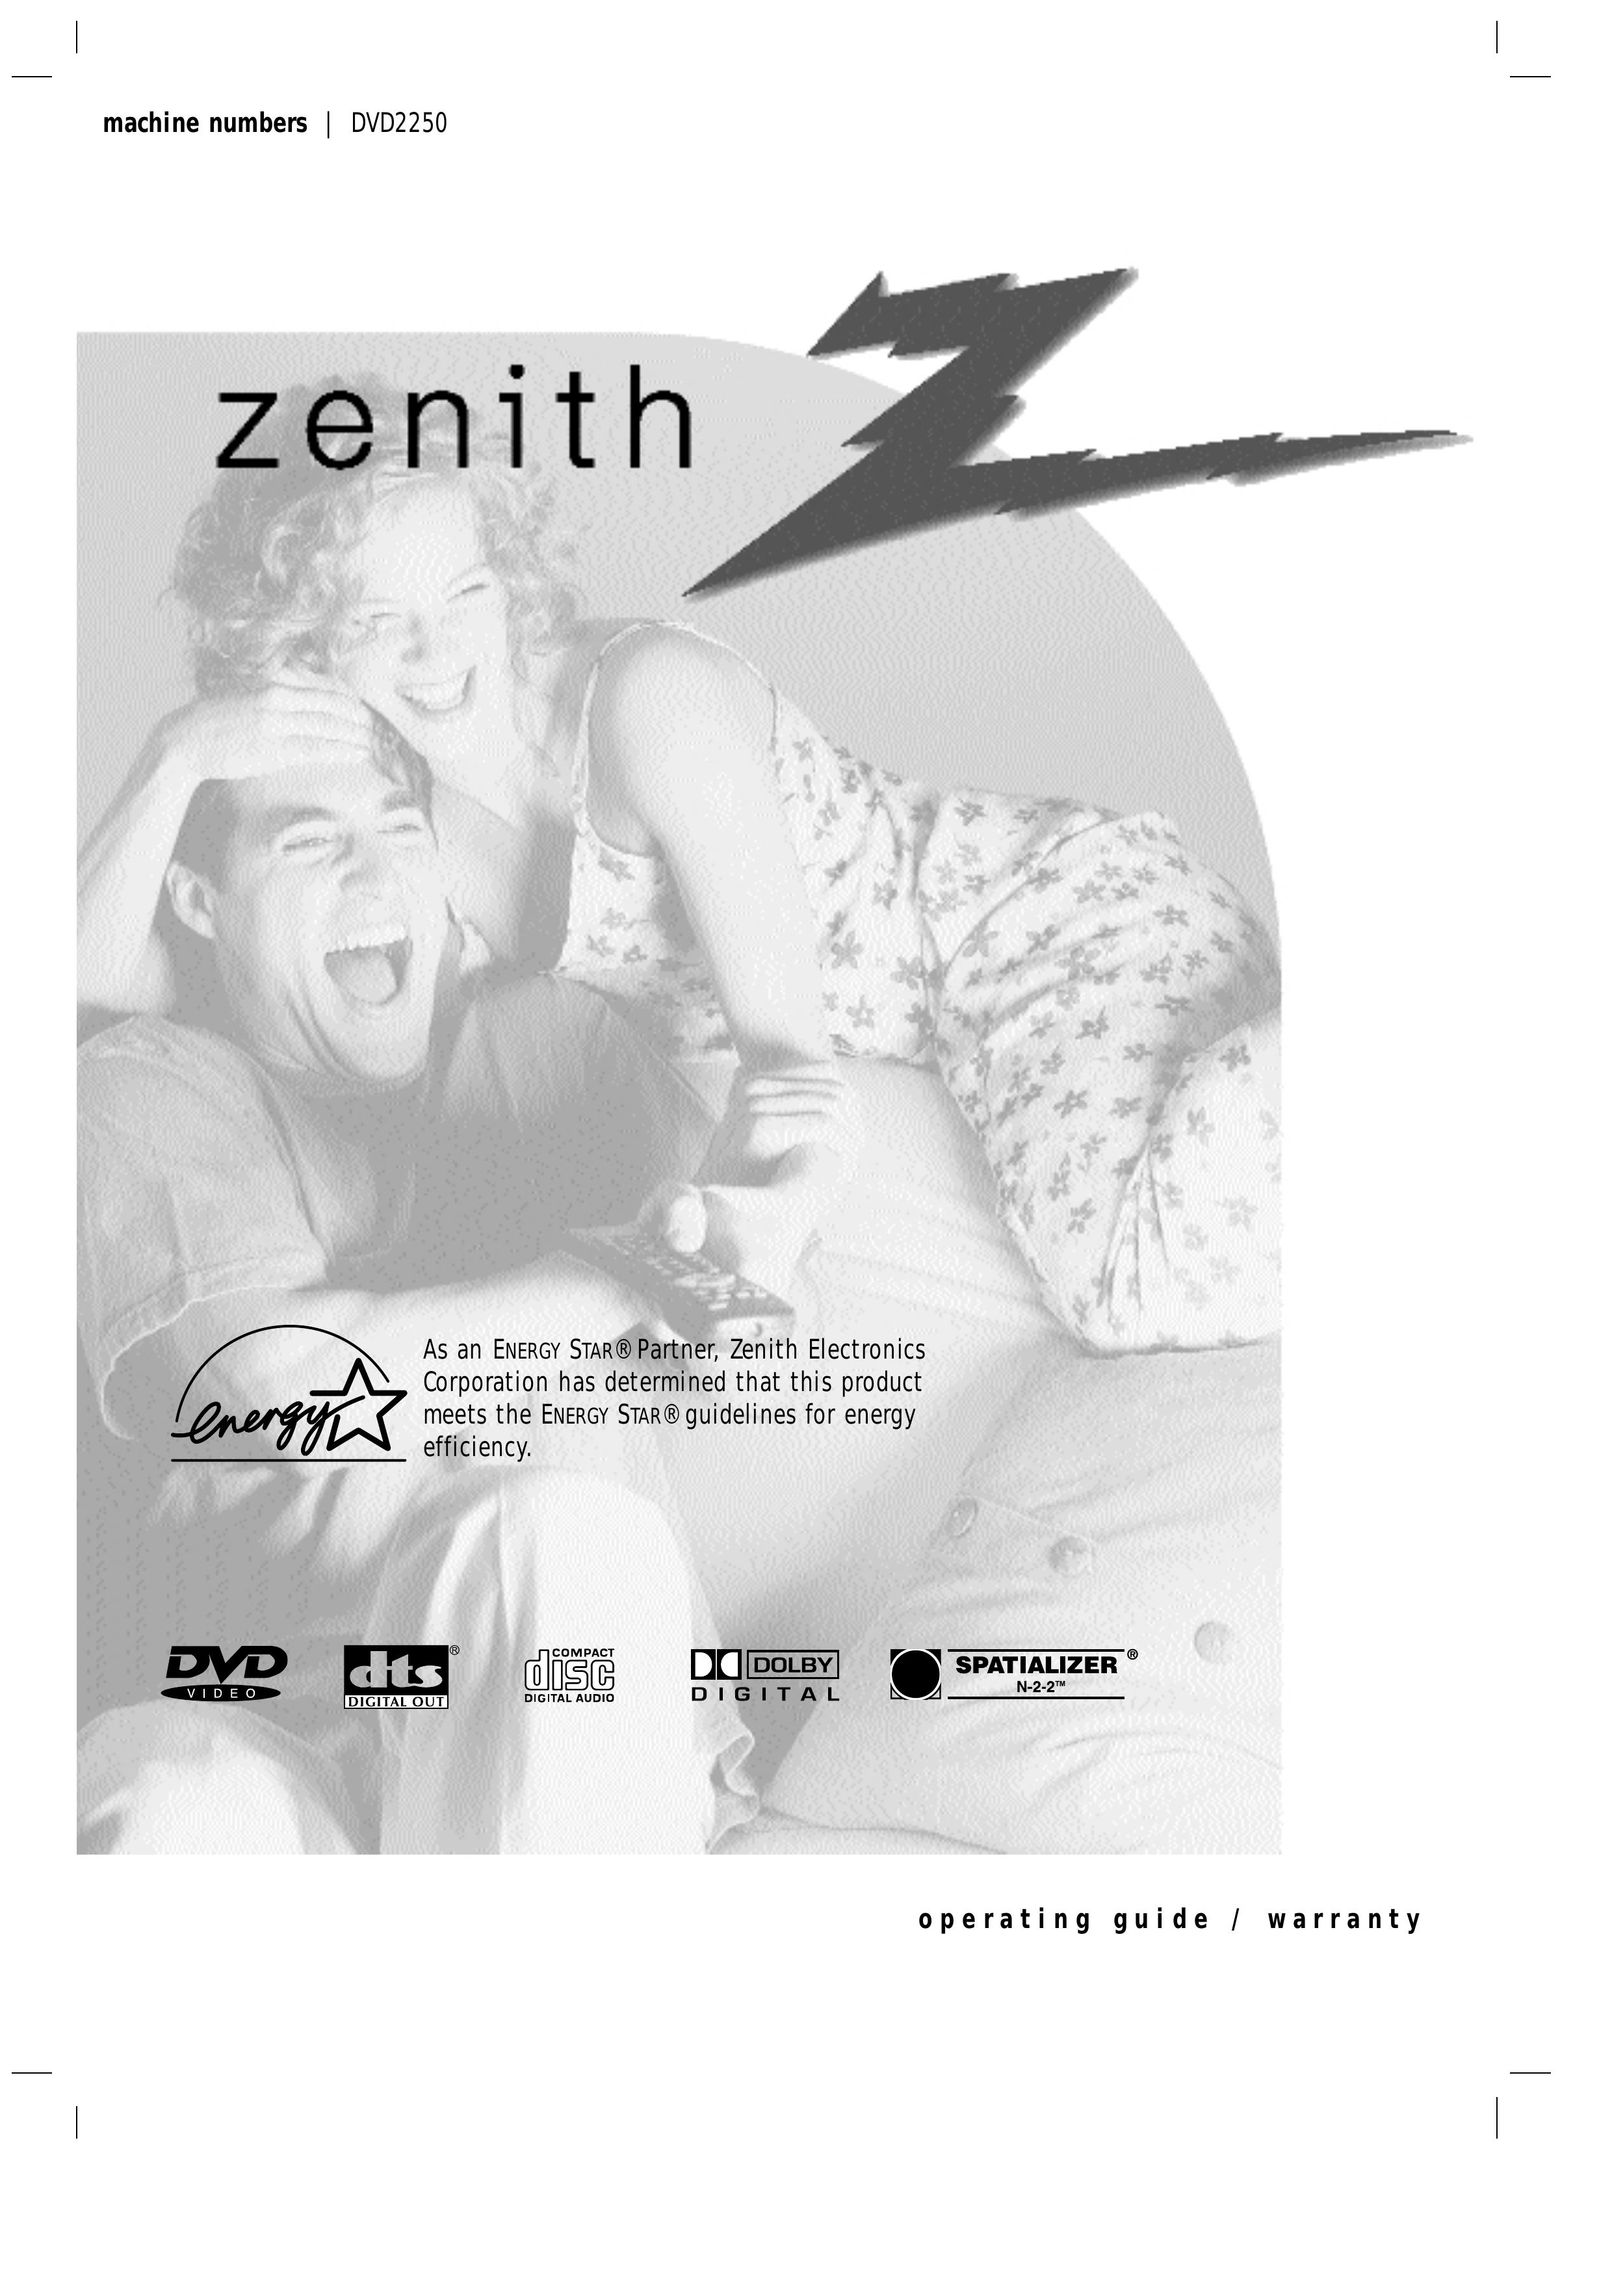 Zenith DVD-2220 DVD Player User Manual